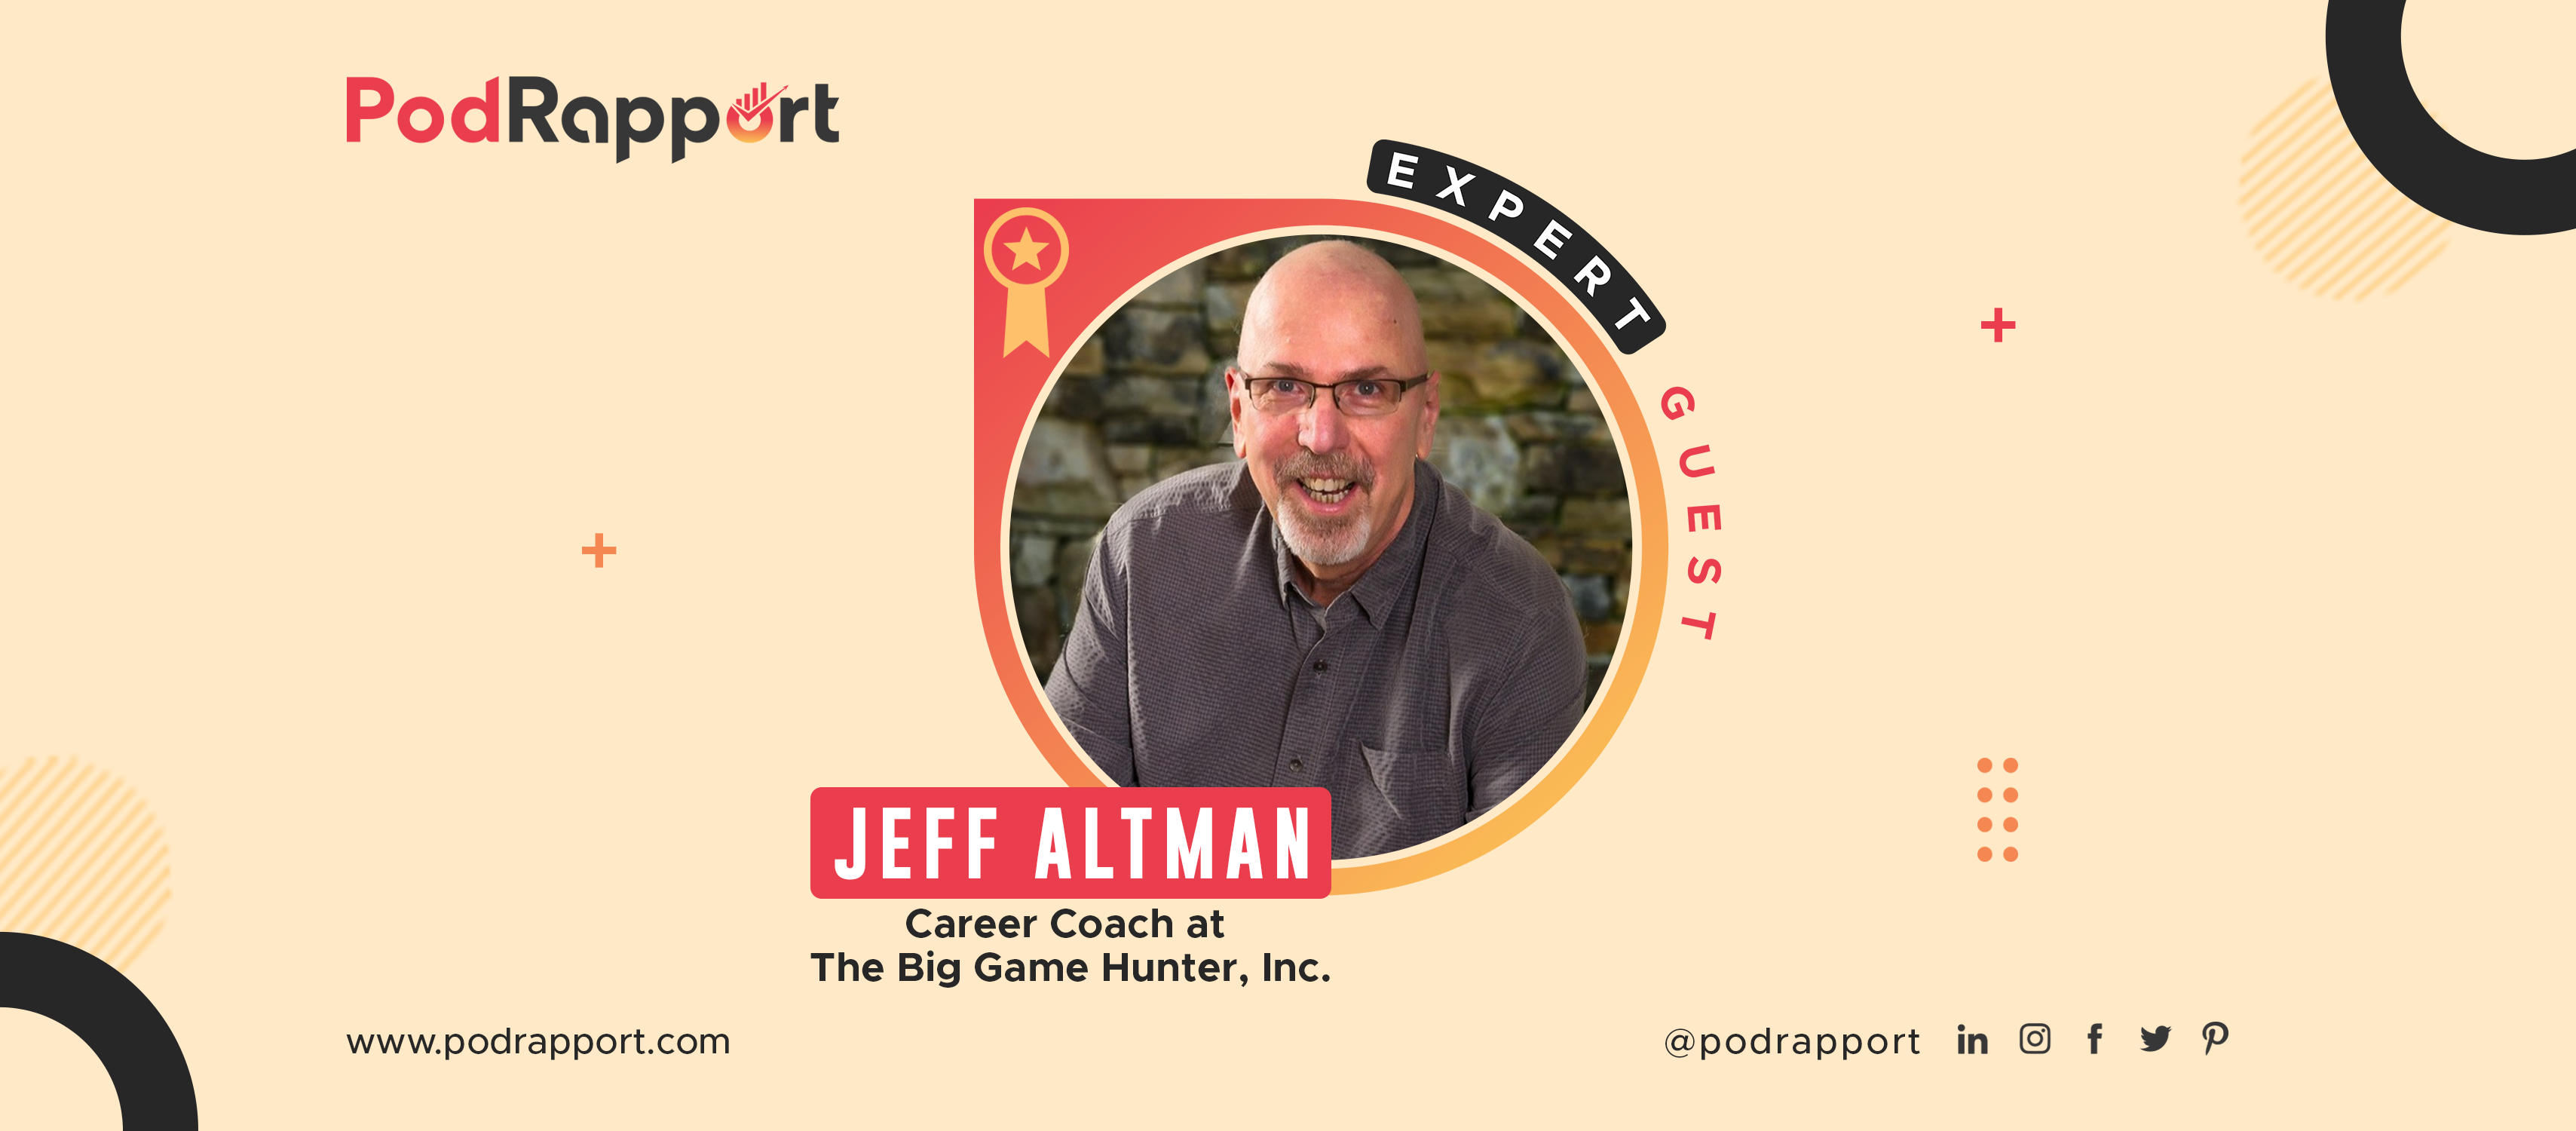 Jeff Altman